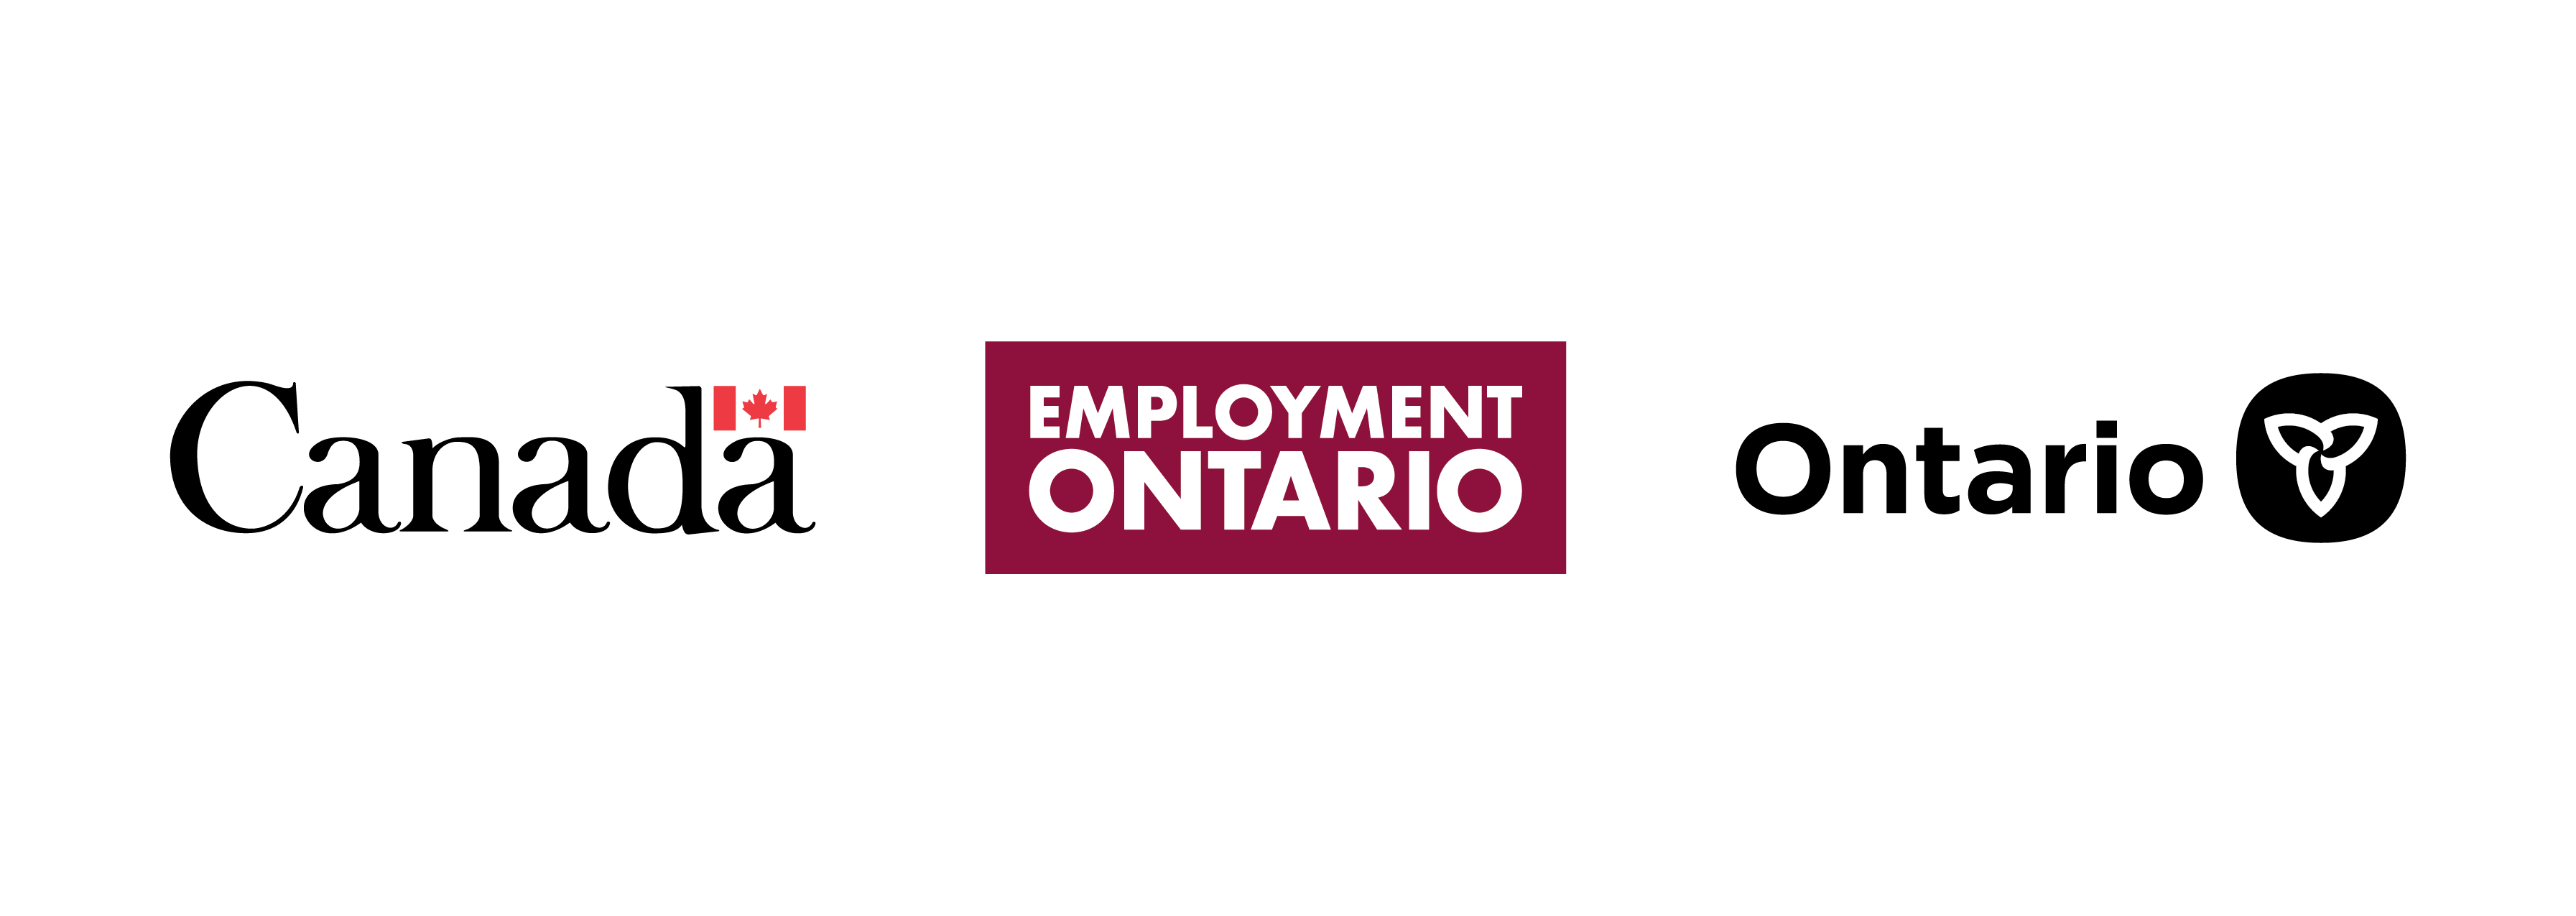 Government of Canada logo, Employment Ontario logo, Ontario government logo